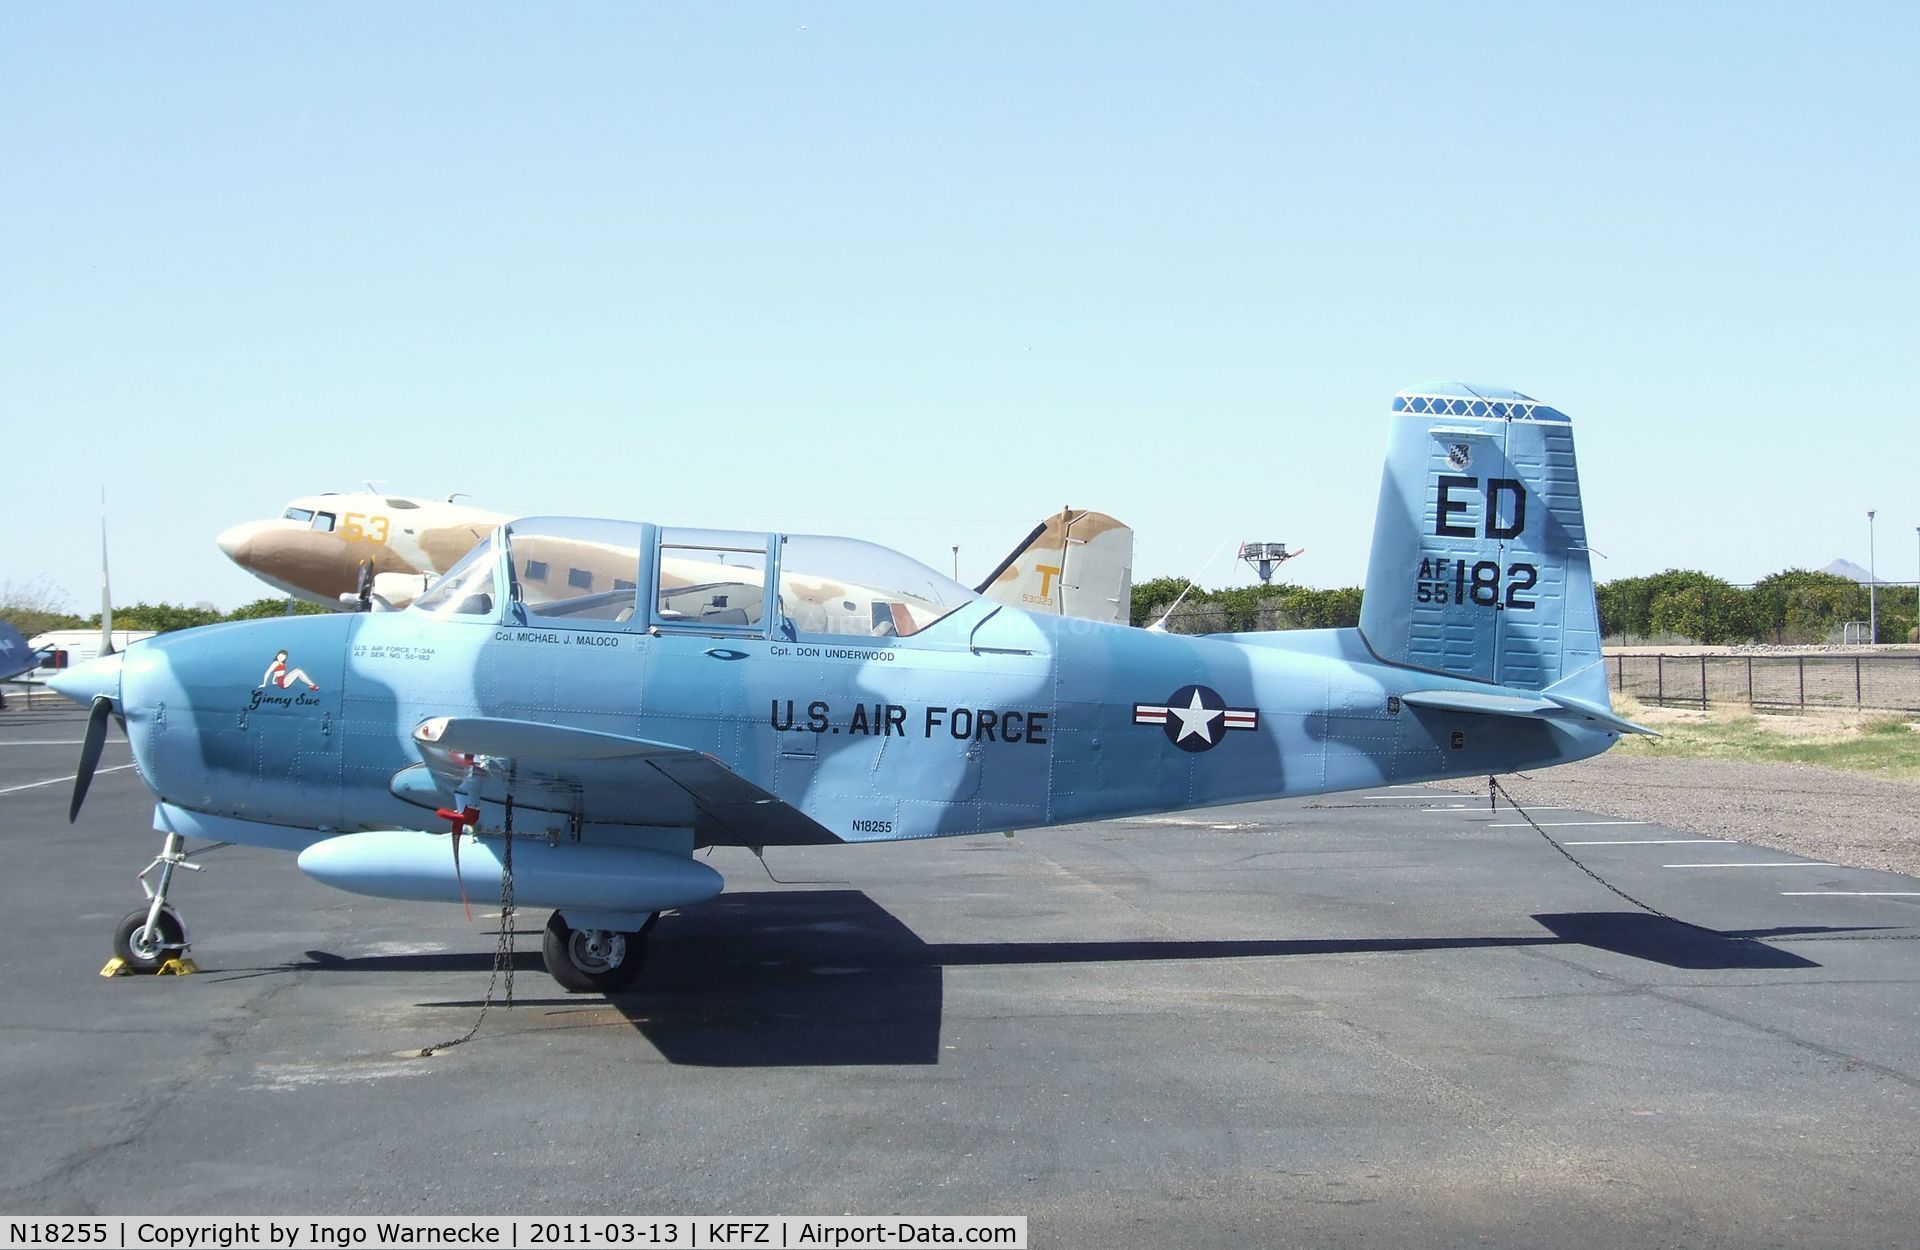 N18255, 1955 Beech A45 C/N G-739, Beechcraft A45 (T-34 Mentor) outside the CAF Museum at Falcon Field, Mesa AZ